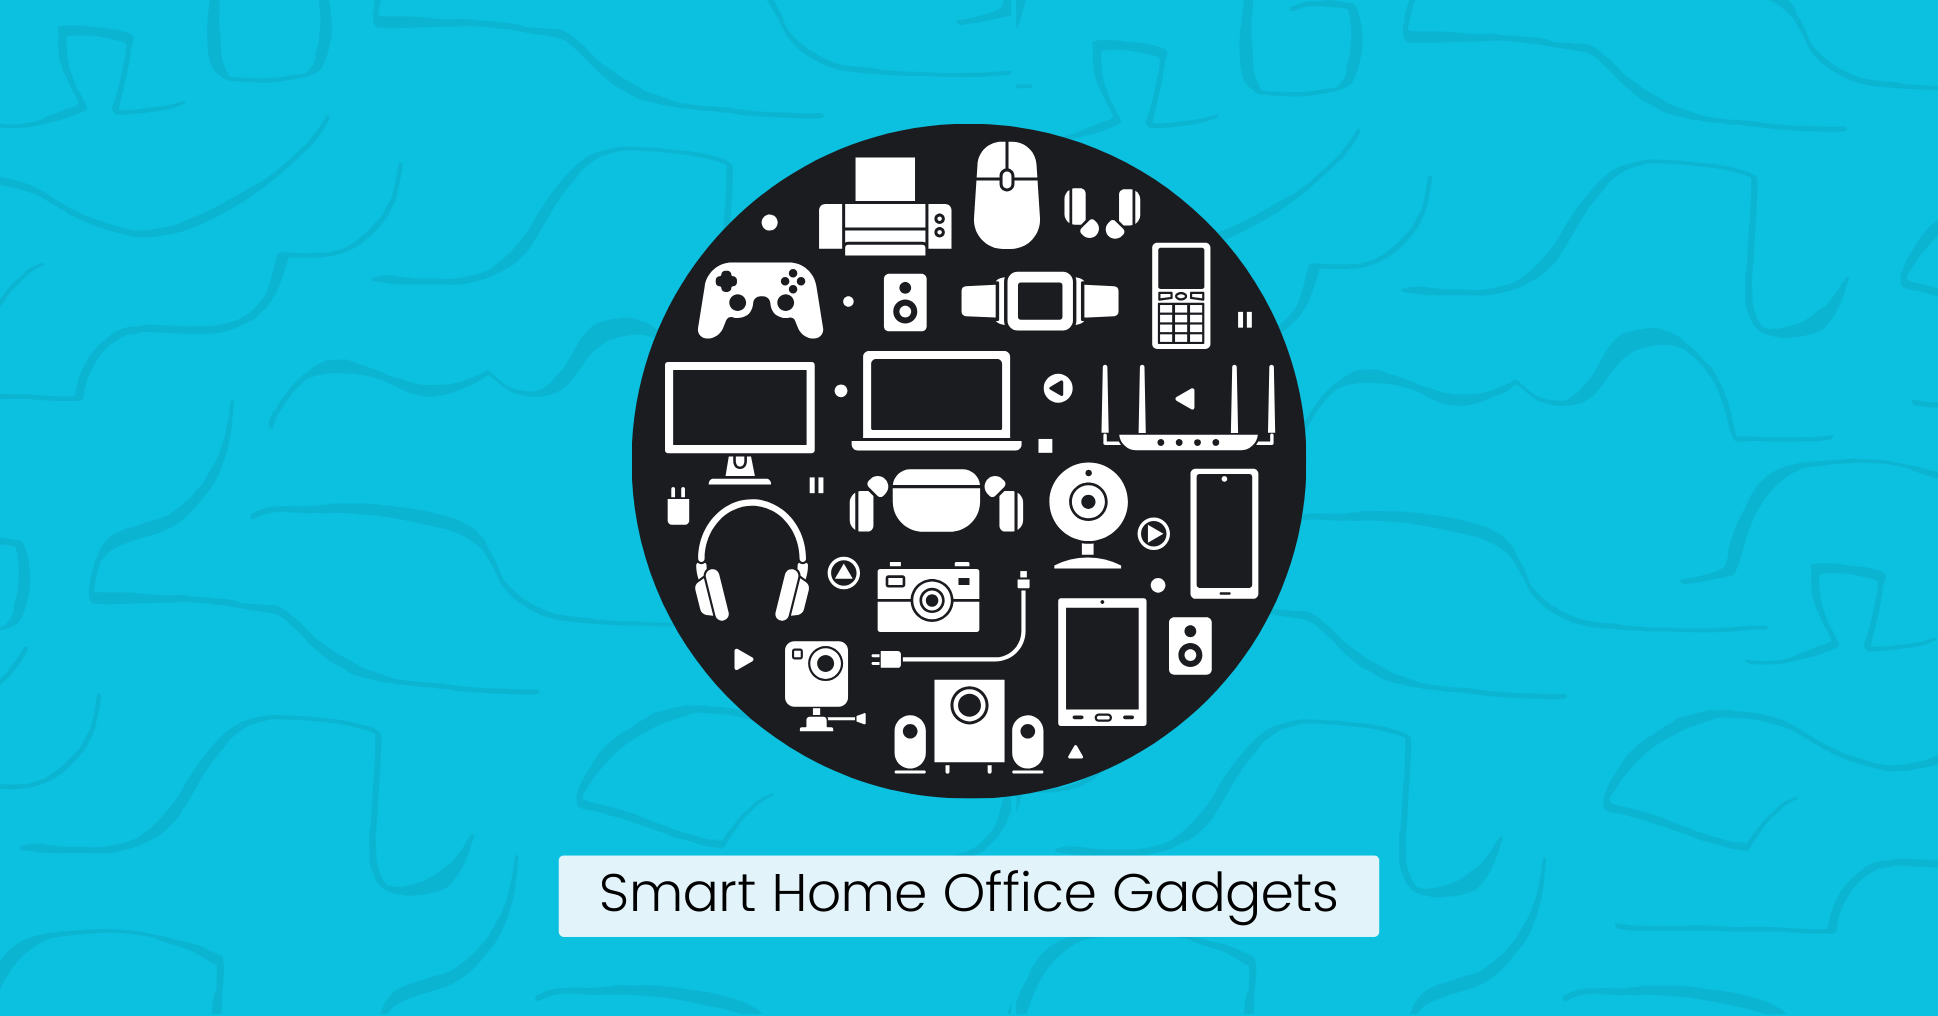 Smart Home Office Gadgets